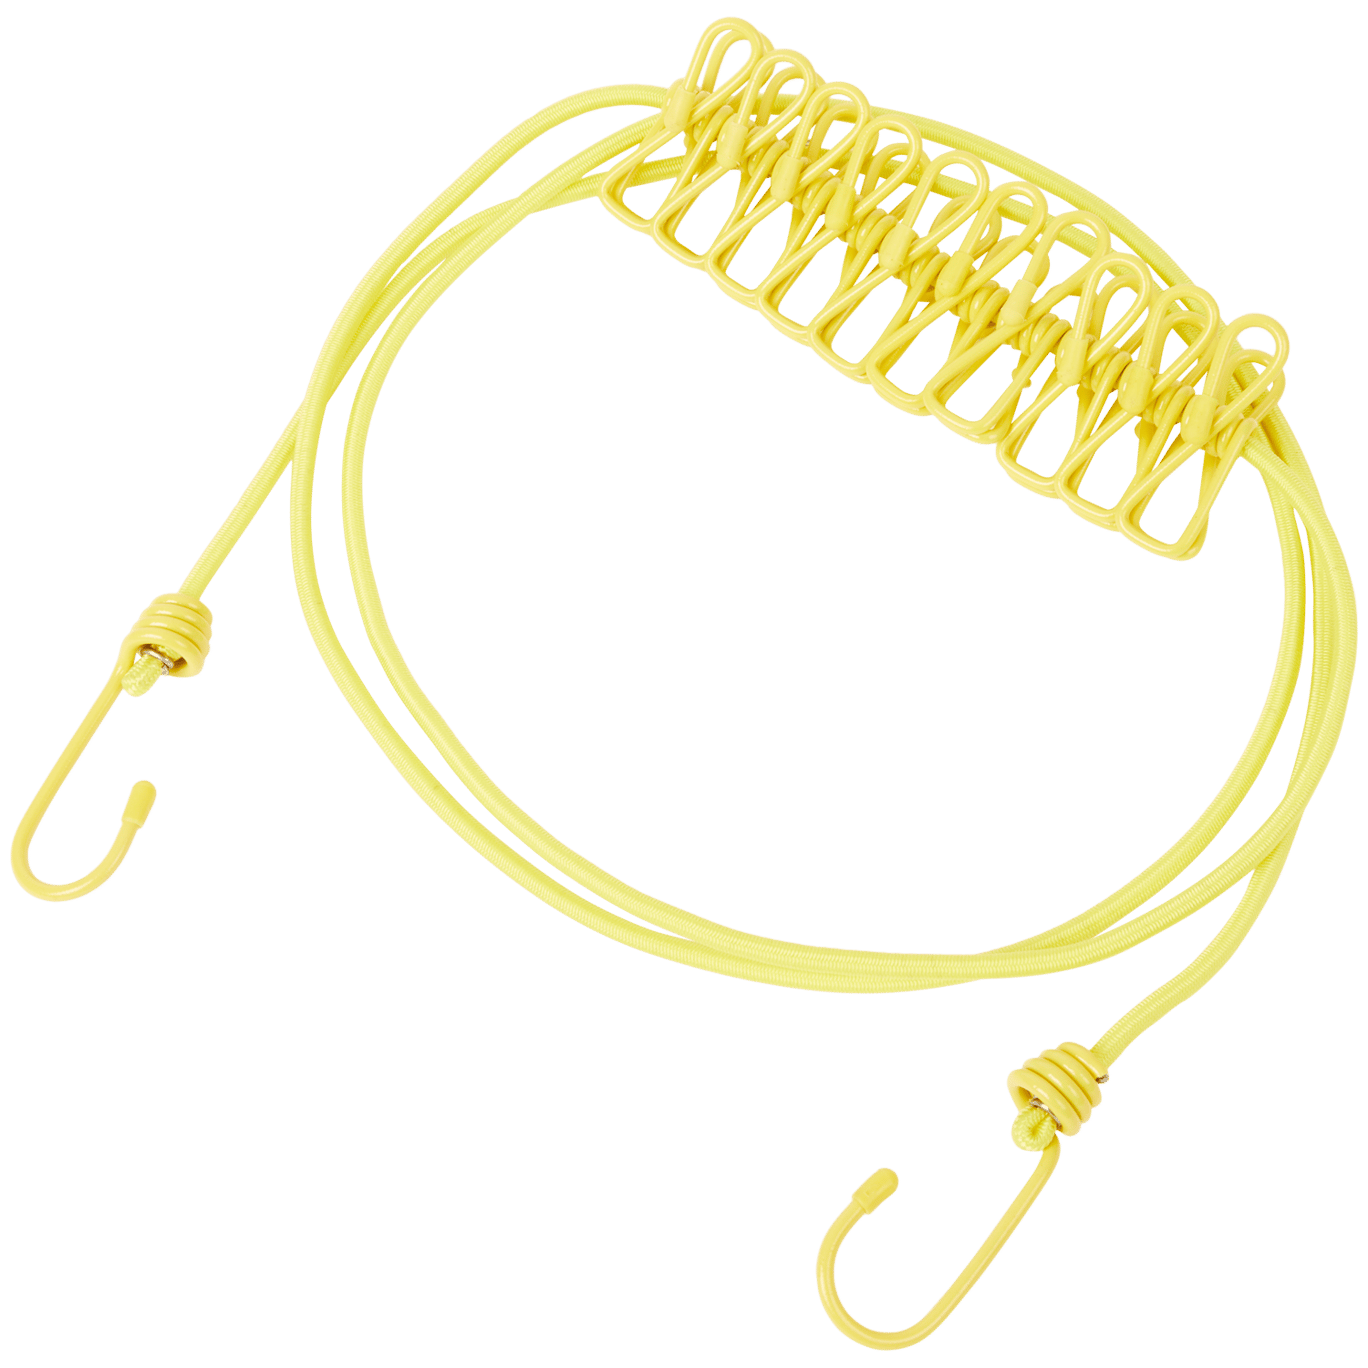 Cuerda flexible para tender Froyak